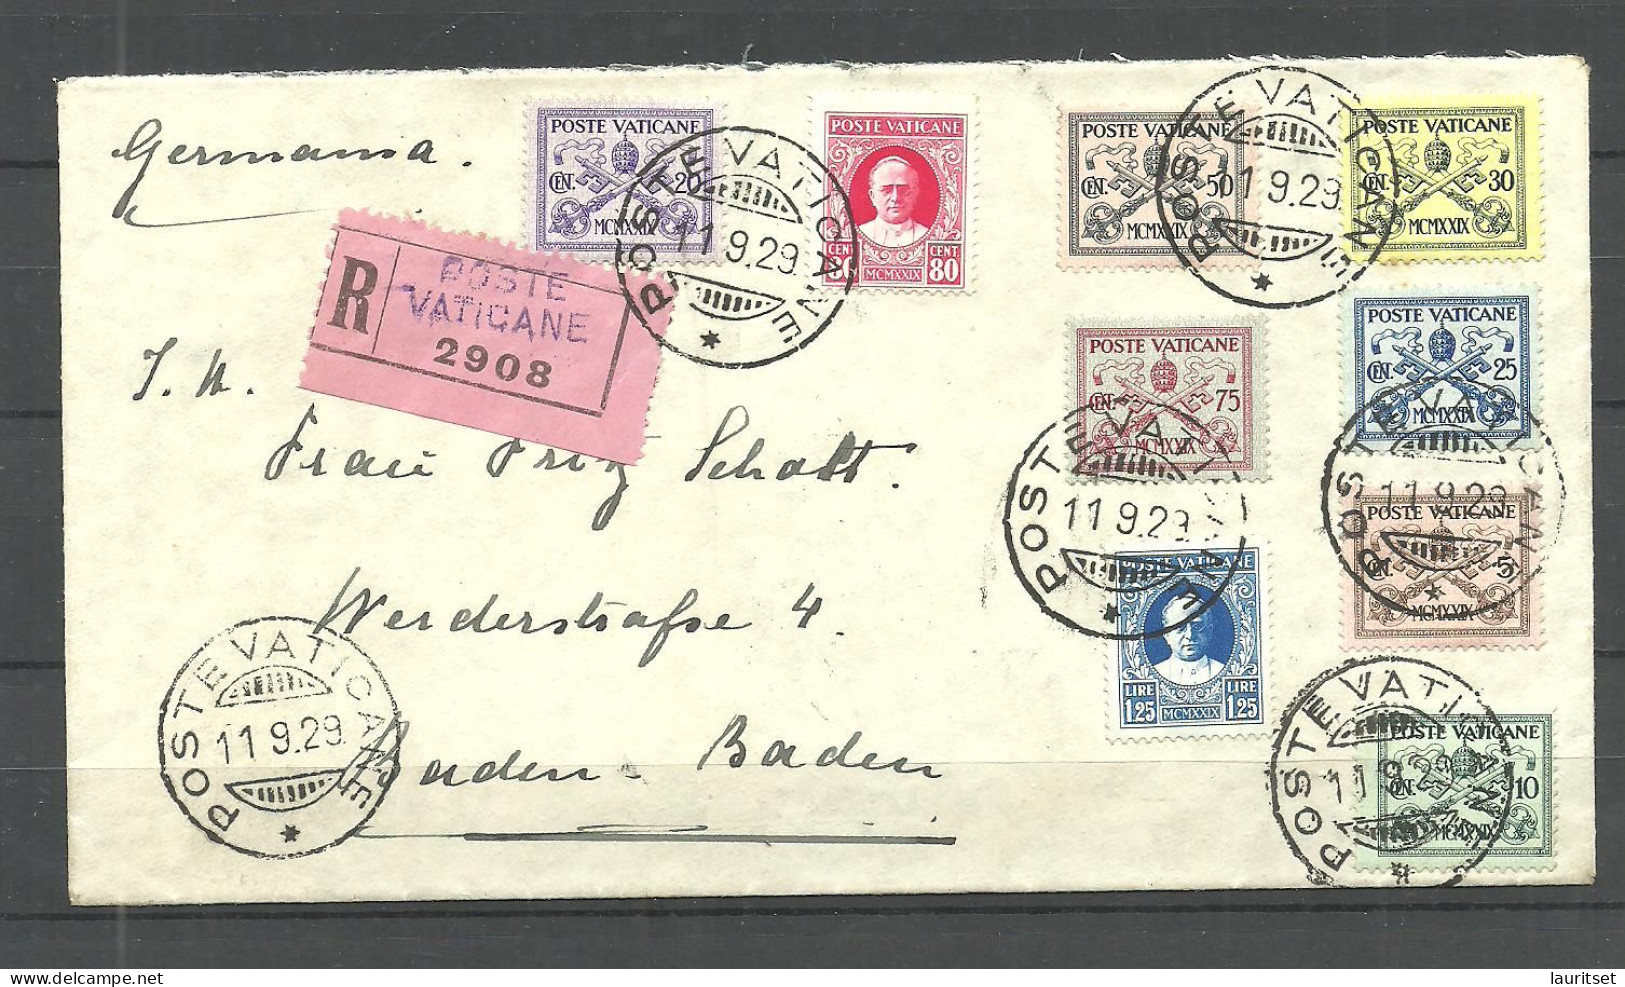 VATICAN Vatikan Poste Varticane 1929 Air Mail Cover Posta Aerea Air Mail Flugpost To Germany Baden Baden - Cartas & Documentos